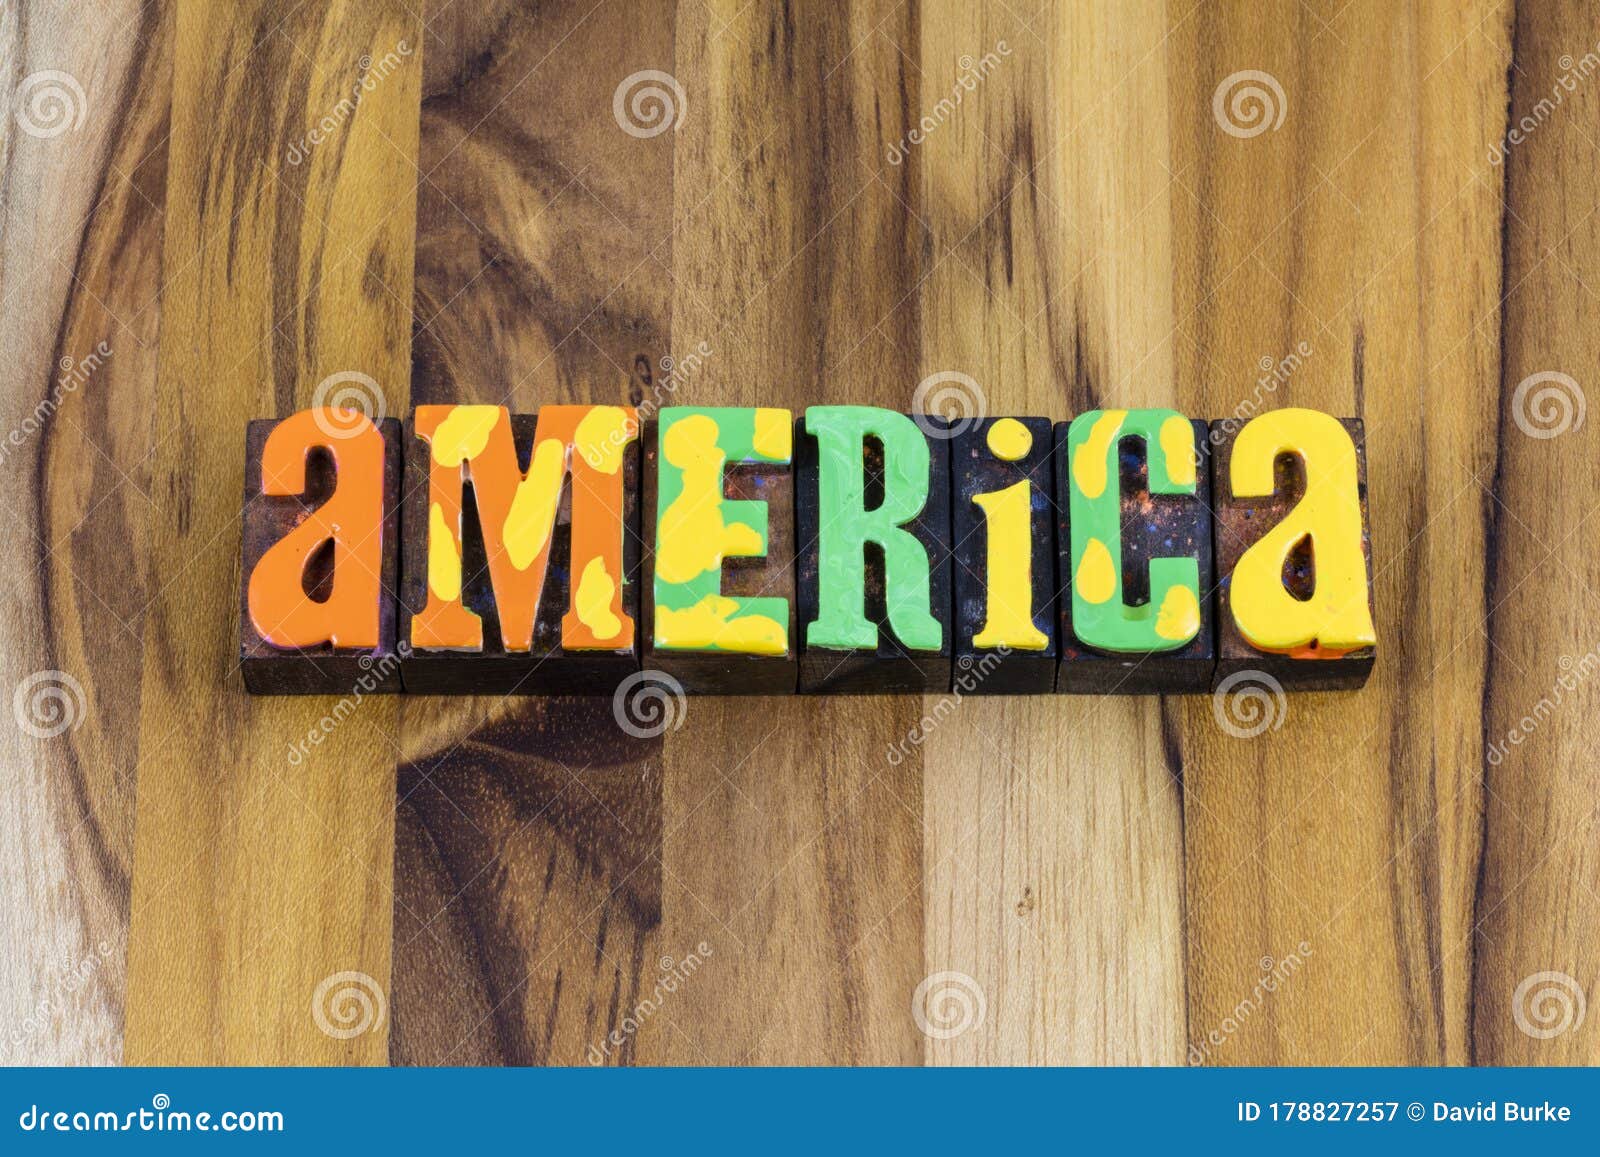 america patriotic strong american wooden background patriotism